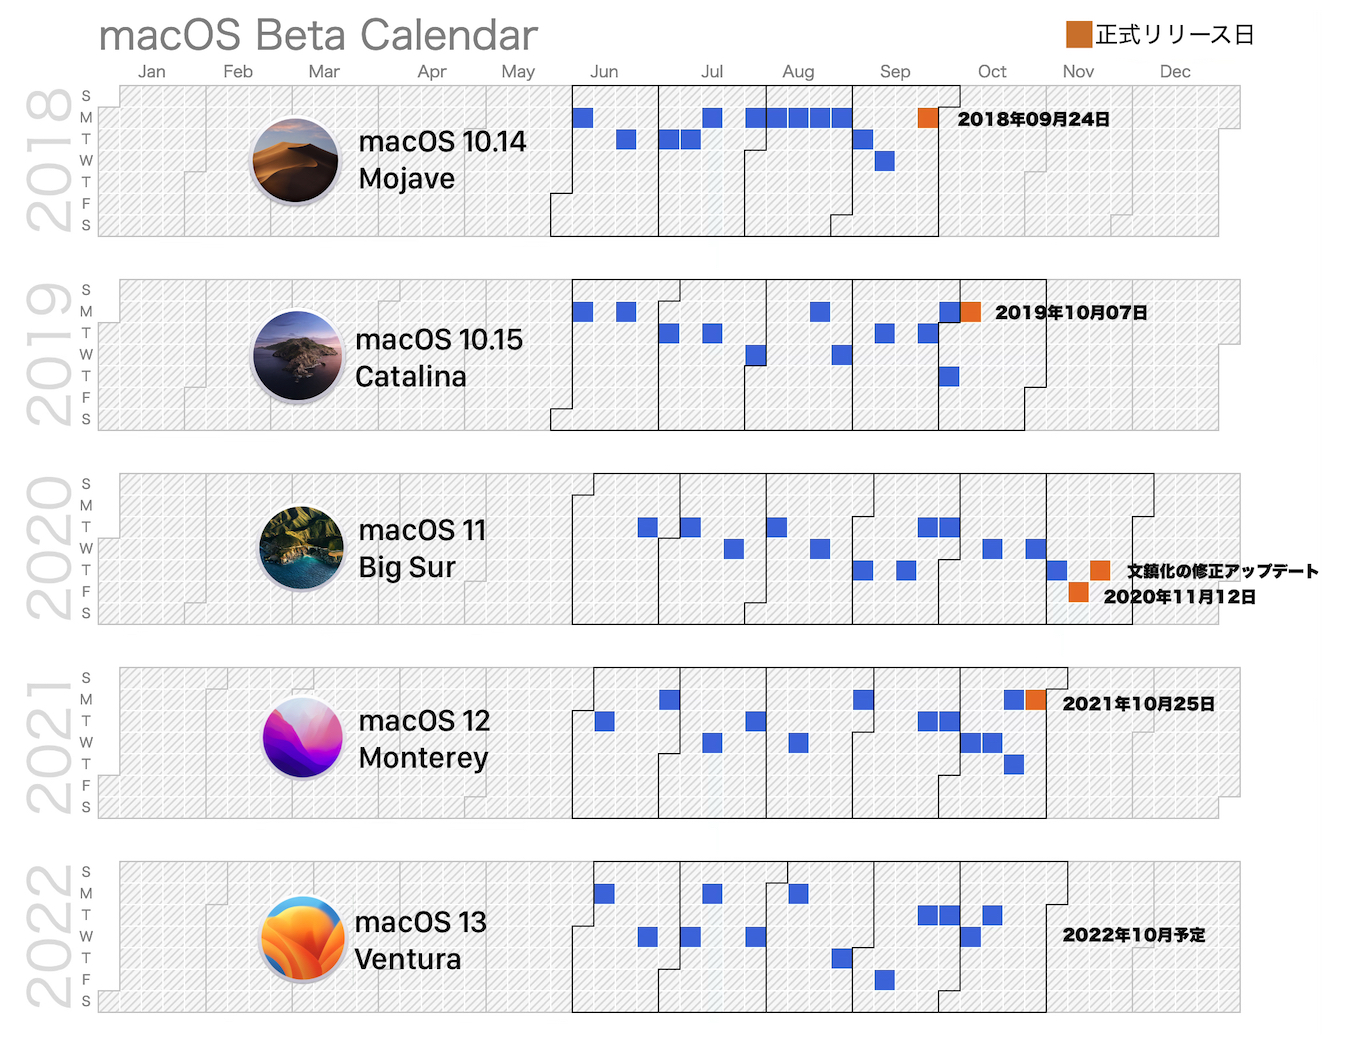 macOS 13 VenturaのBetaカレンダー